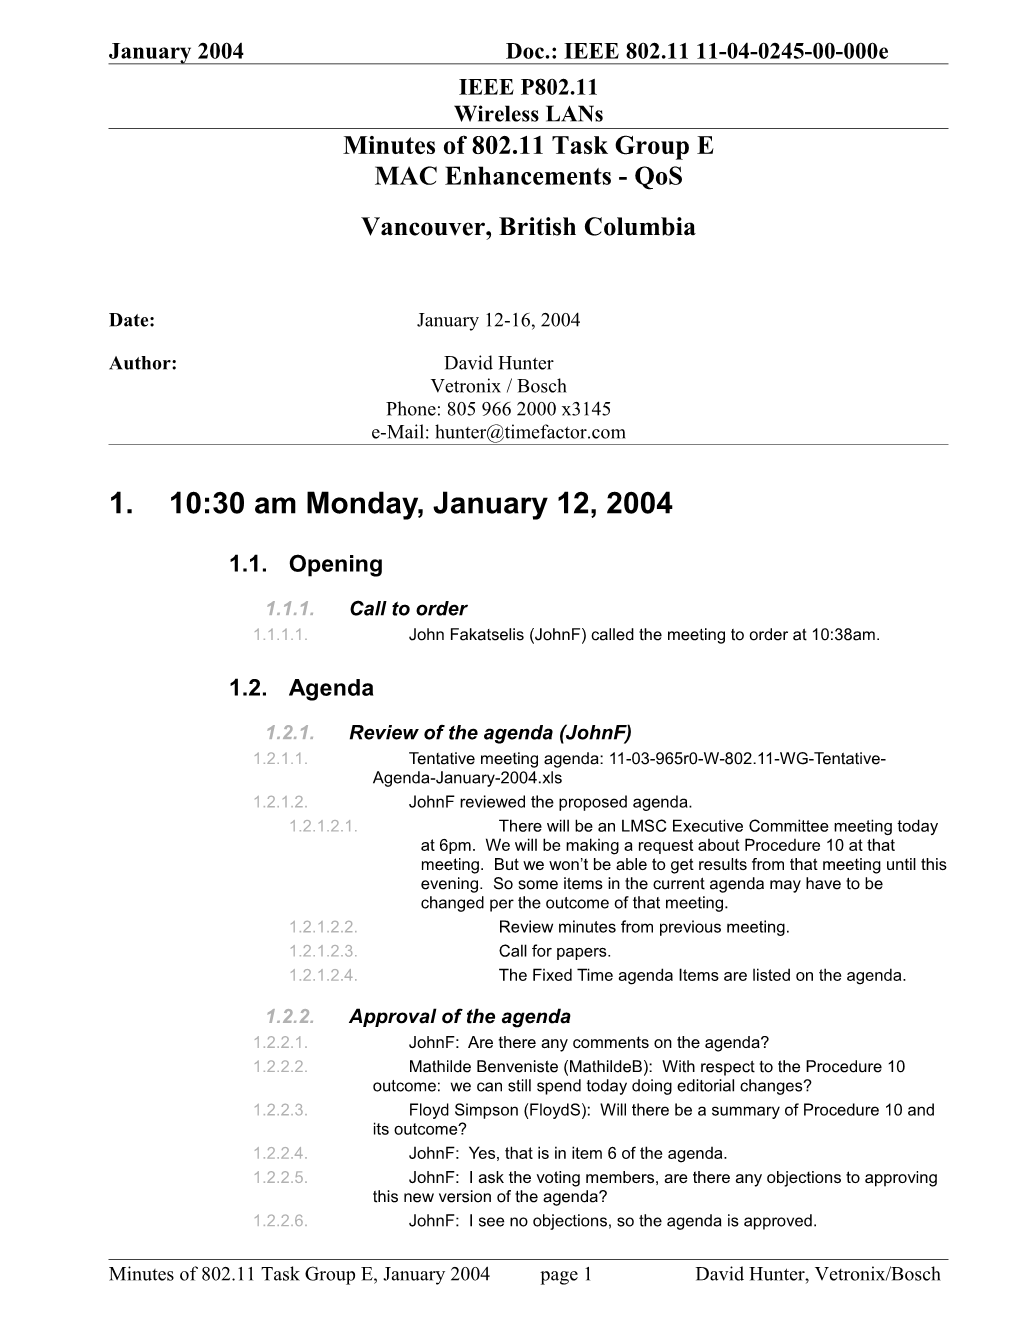 Minutes of 802.11 Task Group E MAC Enhancements - Qos